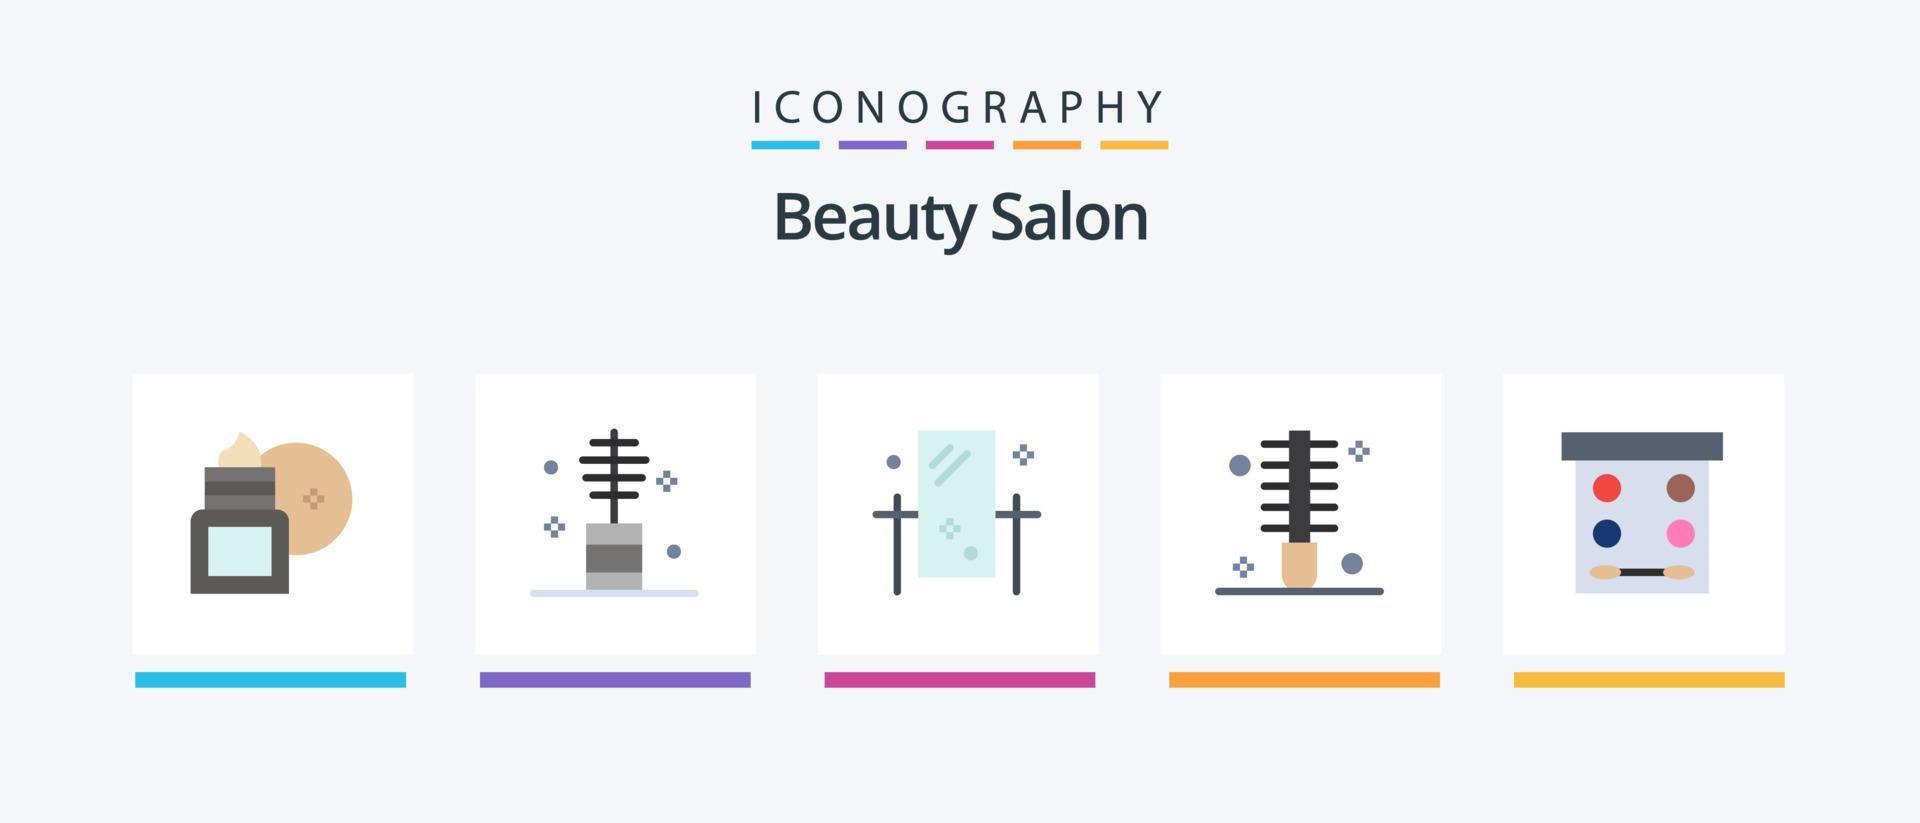 salón de belleza flat 5 icon pack incluyendo mujer. belleza. maquillaje. reflexión. aseo. diseño de iconos creativos vector